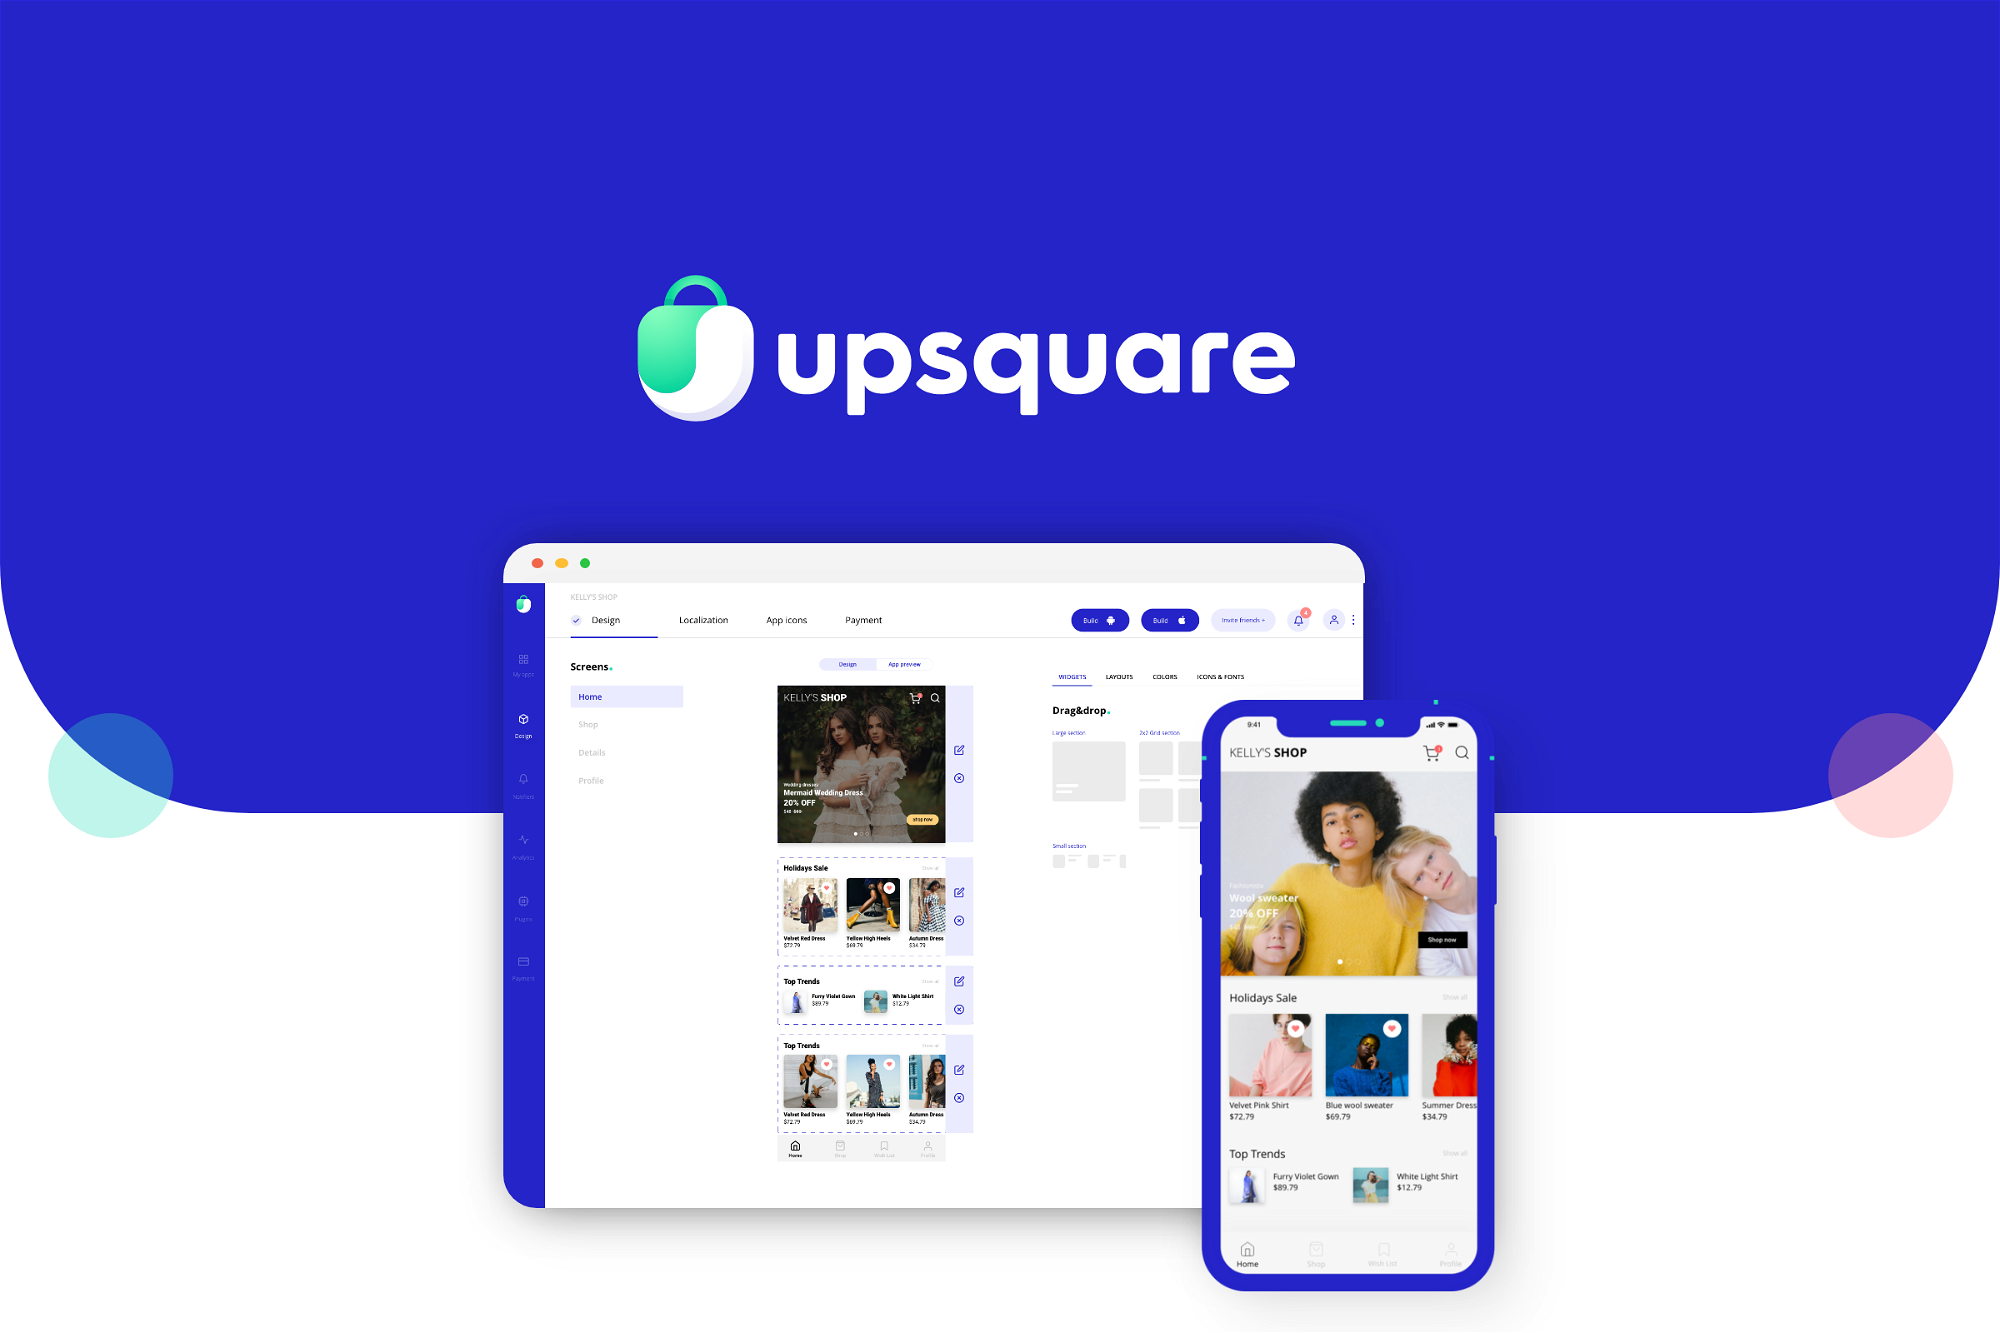 AppSumo Deal for Upsquare